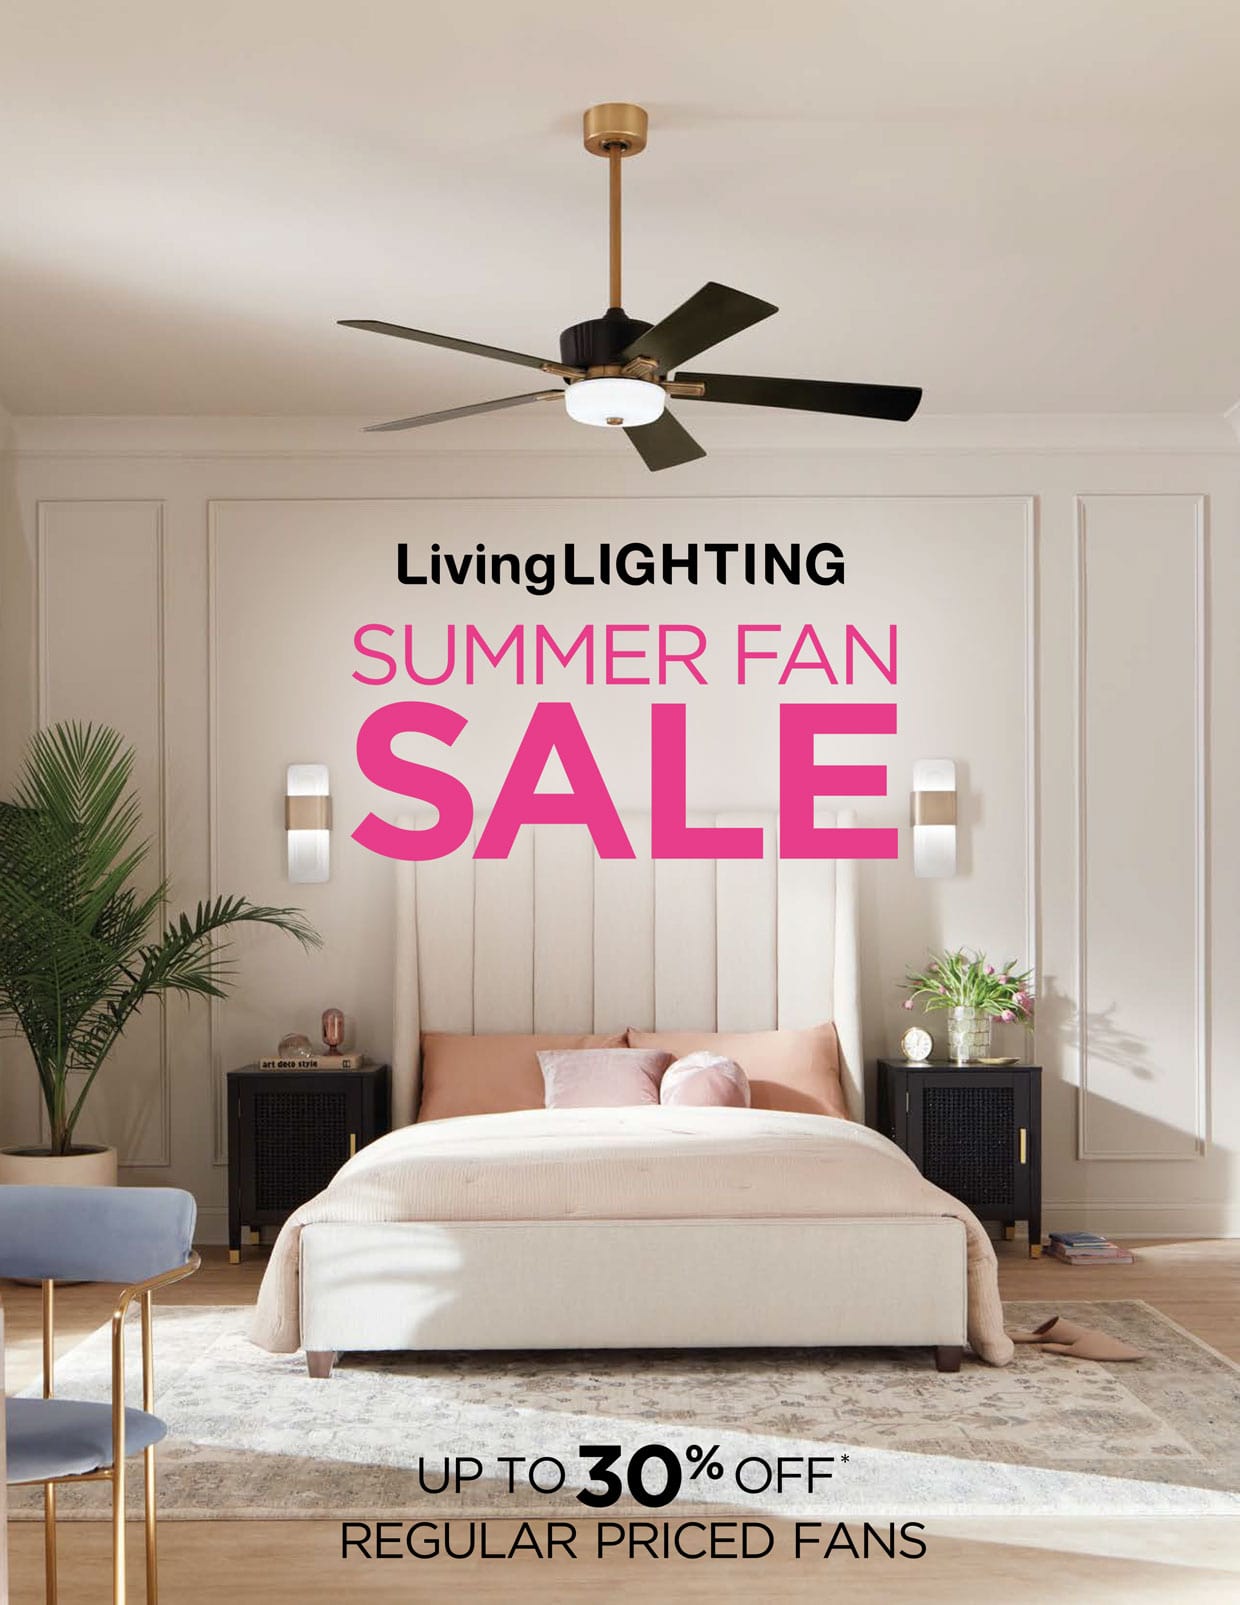 Livinglighting Summer Fan Sale - Up to 30% off regular priced fans